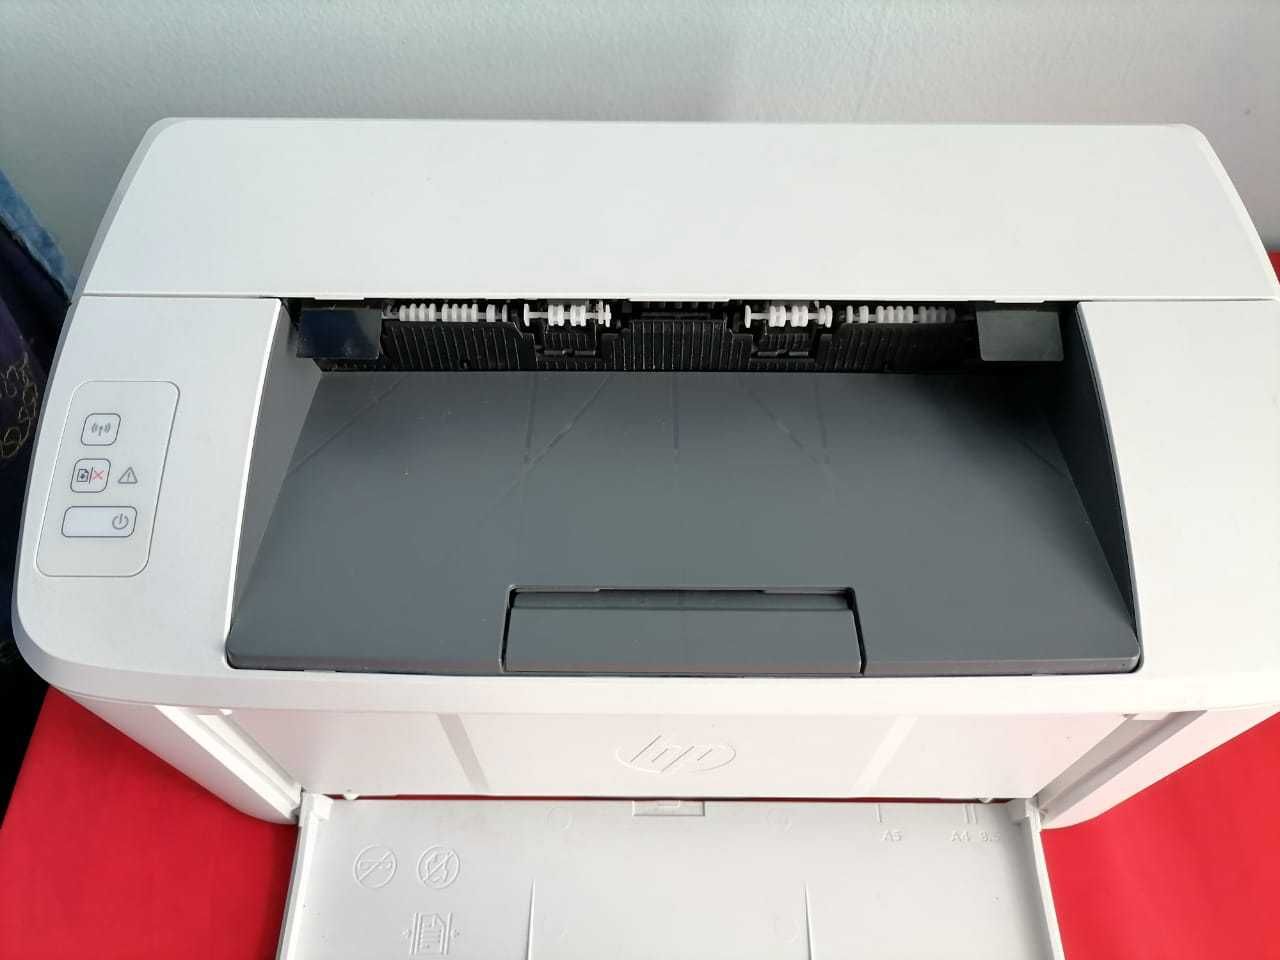 Принтер лазерный HP LaserJet Pro M15w